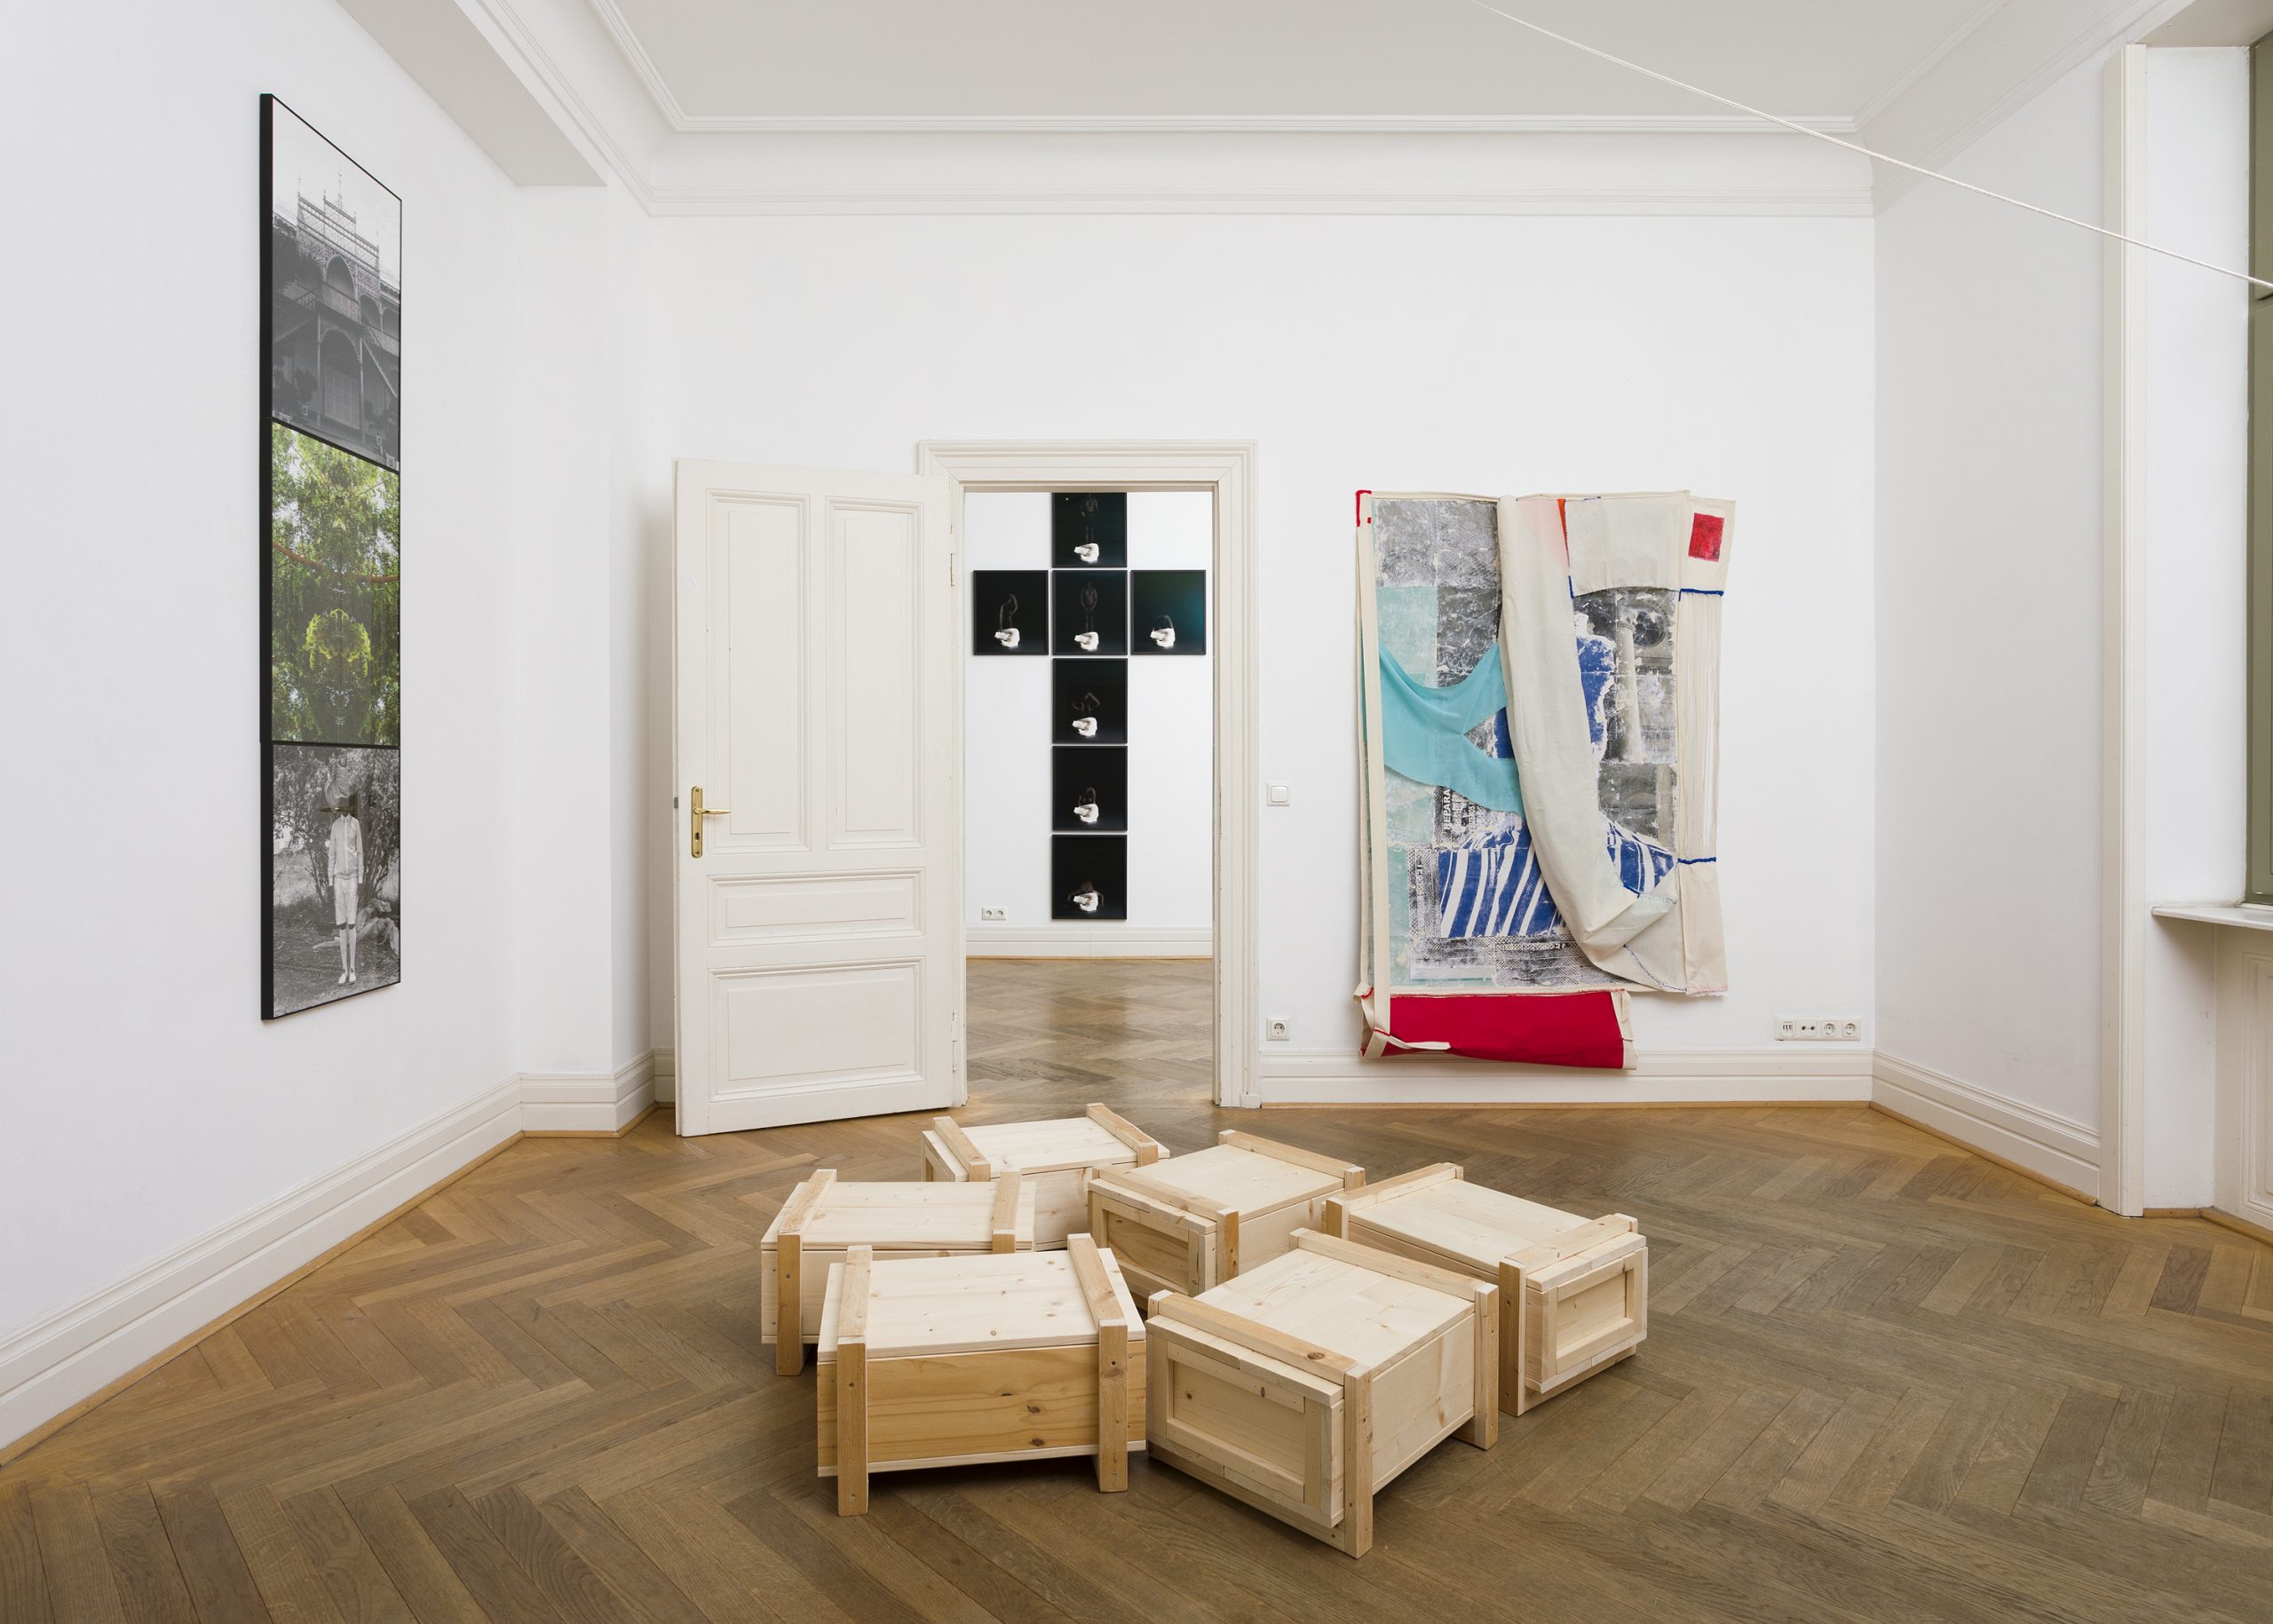 Installation view: Januário Jano, 'Arquivo Mestre’, (2021). Photo by Ivan Murzin, courtesy of Jean-Claude Maier Gallery